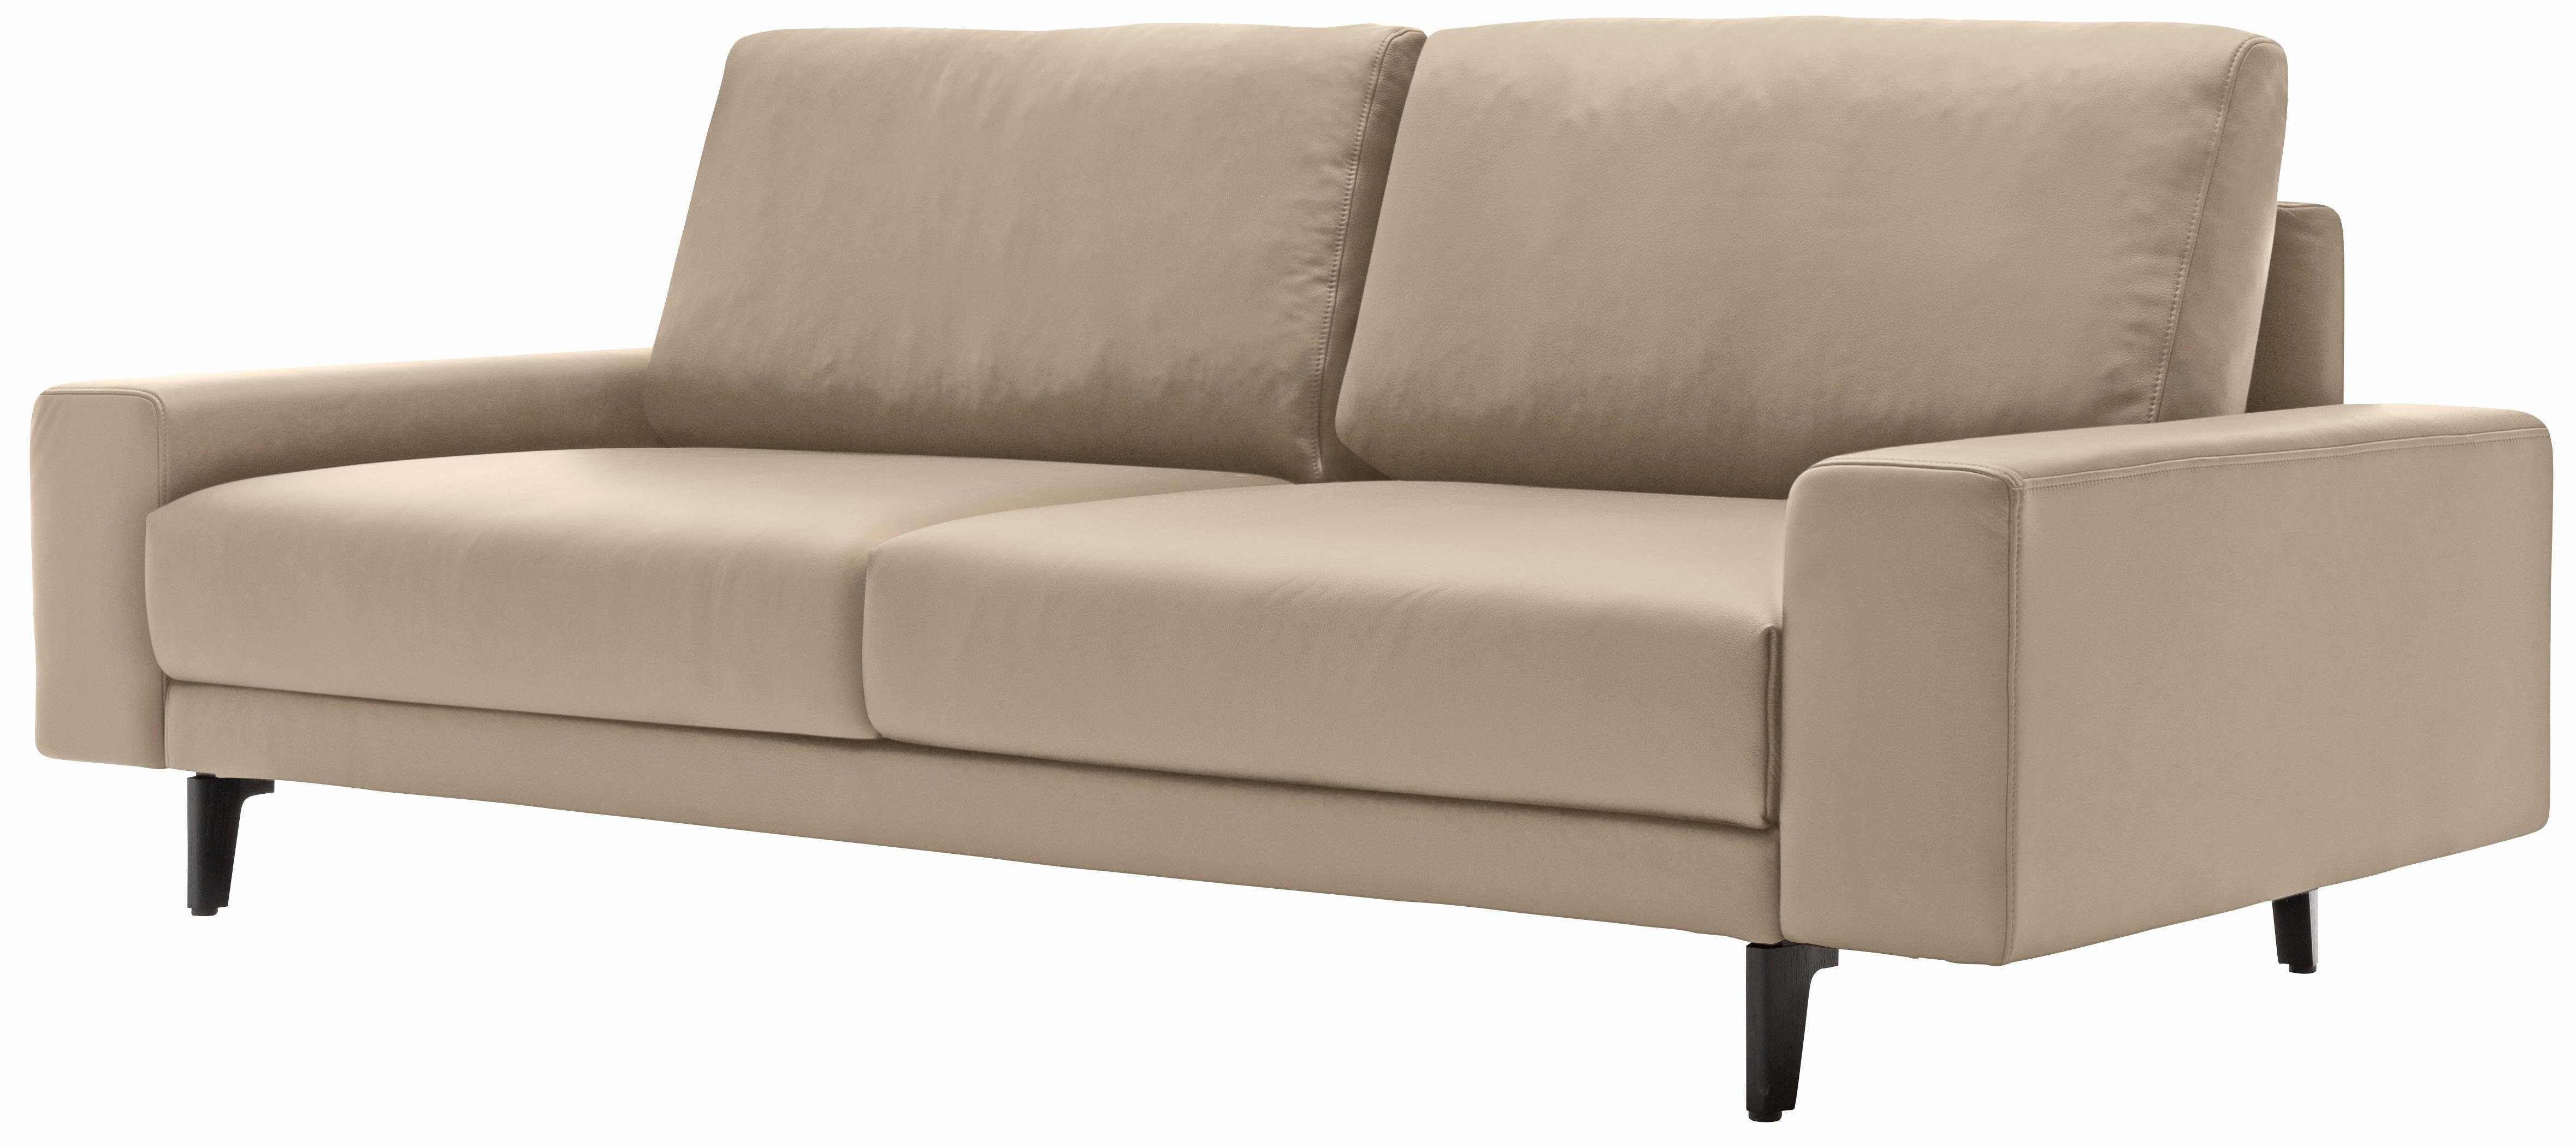 breit cm niedrig, 2-Sitzer 180 hs.450, Armlehne in hülsta umbragrau, Alugussfüße sofa Breite